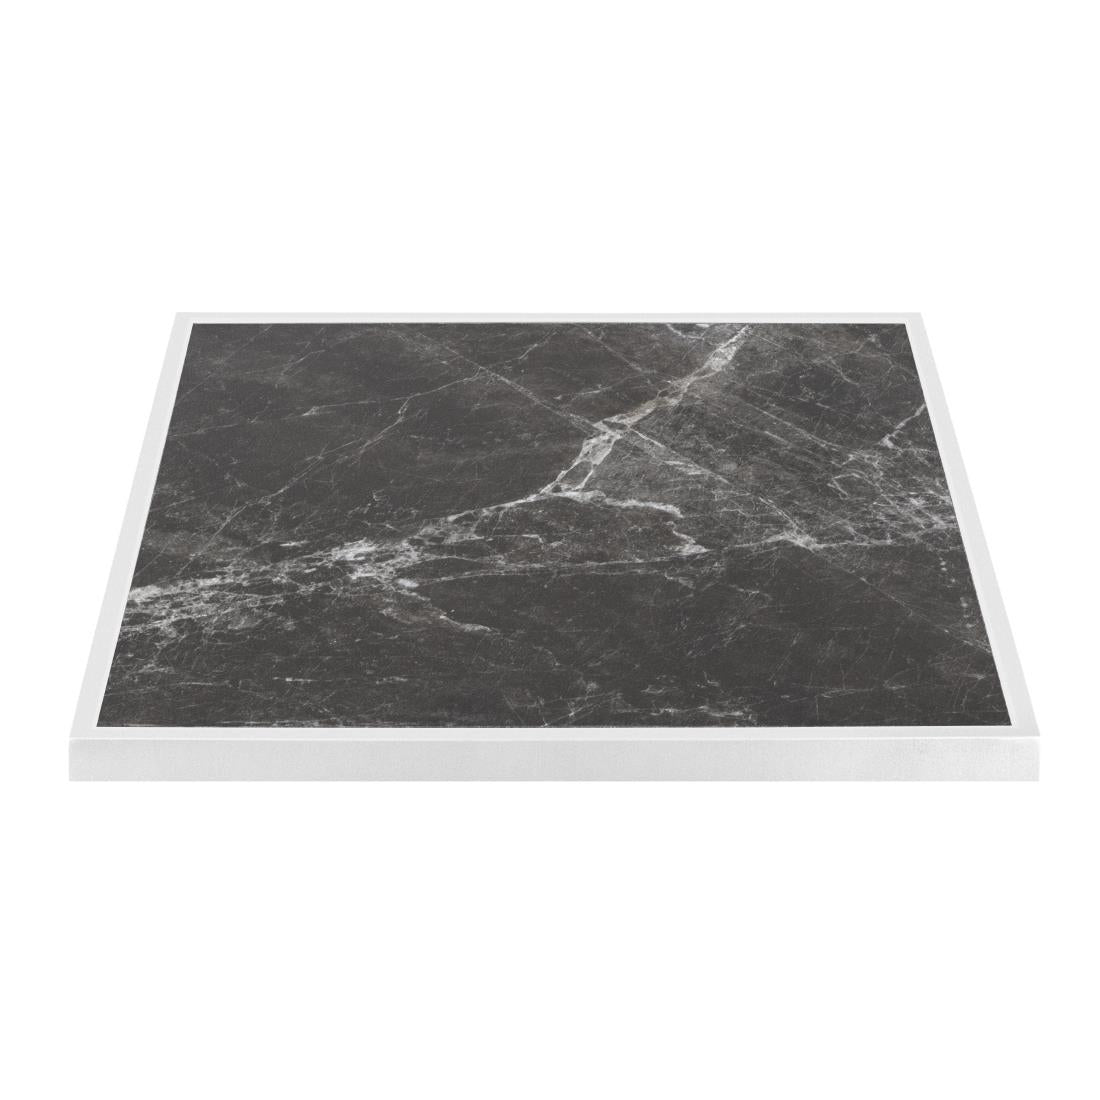 FU516 Bolero Dark Granite Effect Outdoor Tempered Glass Table Top White Trim 700mm